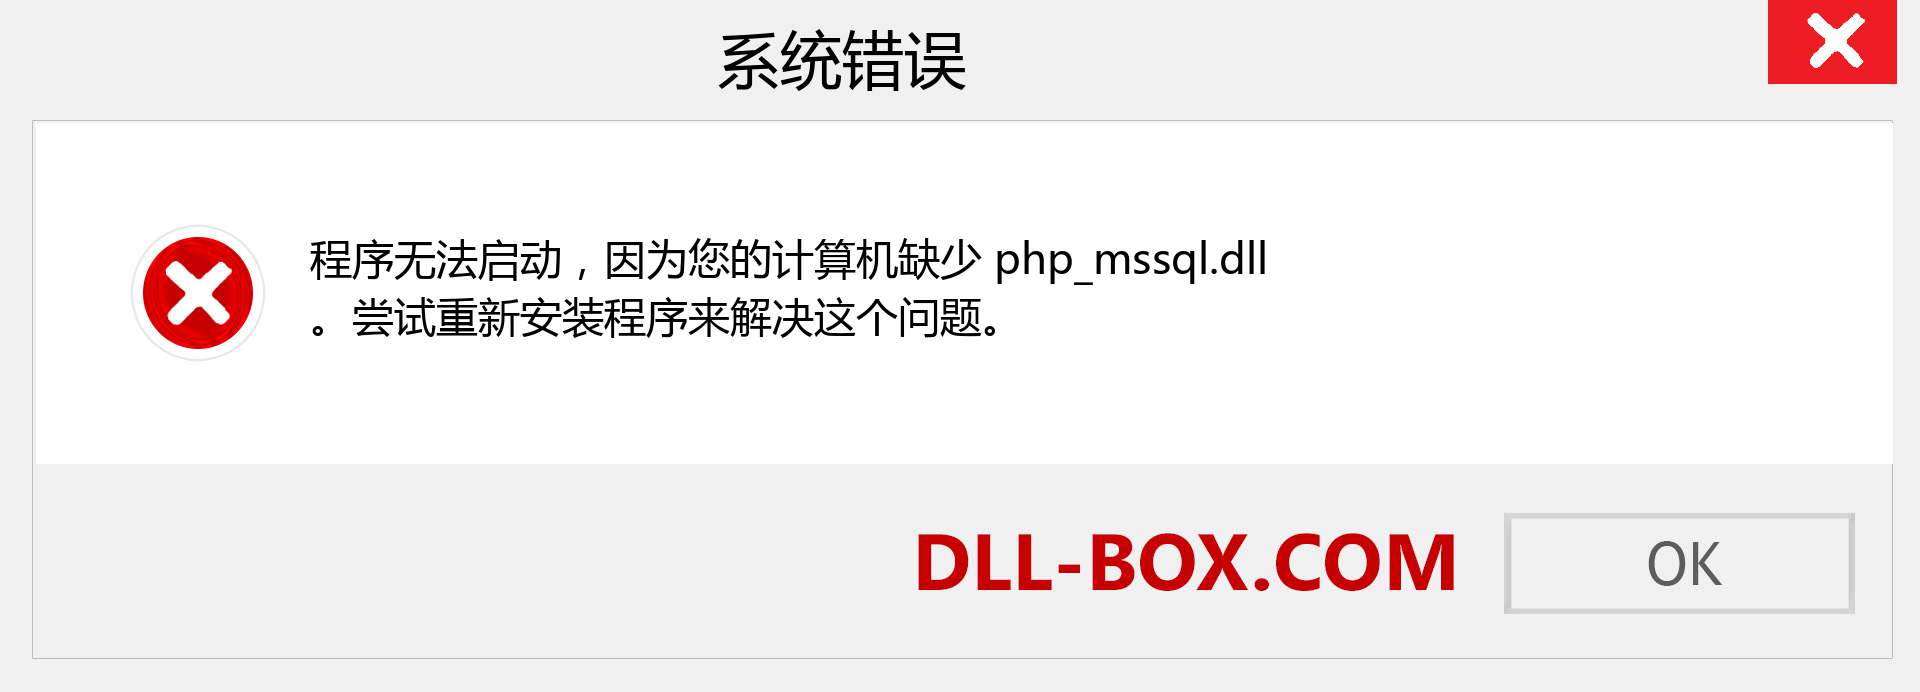 php_mssql.dll 文件丢失？。 适用于 Windows 7、8、10 的下载 - 修复 Windows、照片、图像上的 php_mssql dll 丢失错误